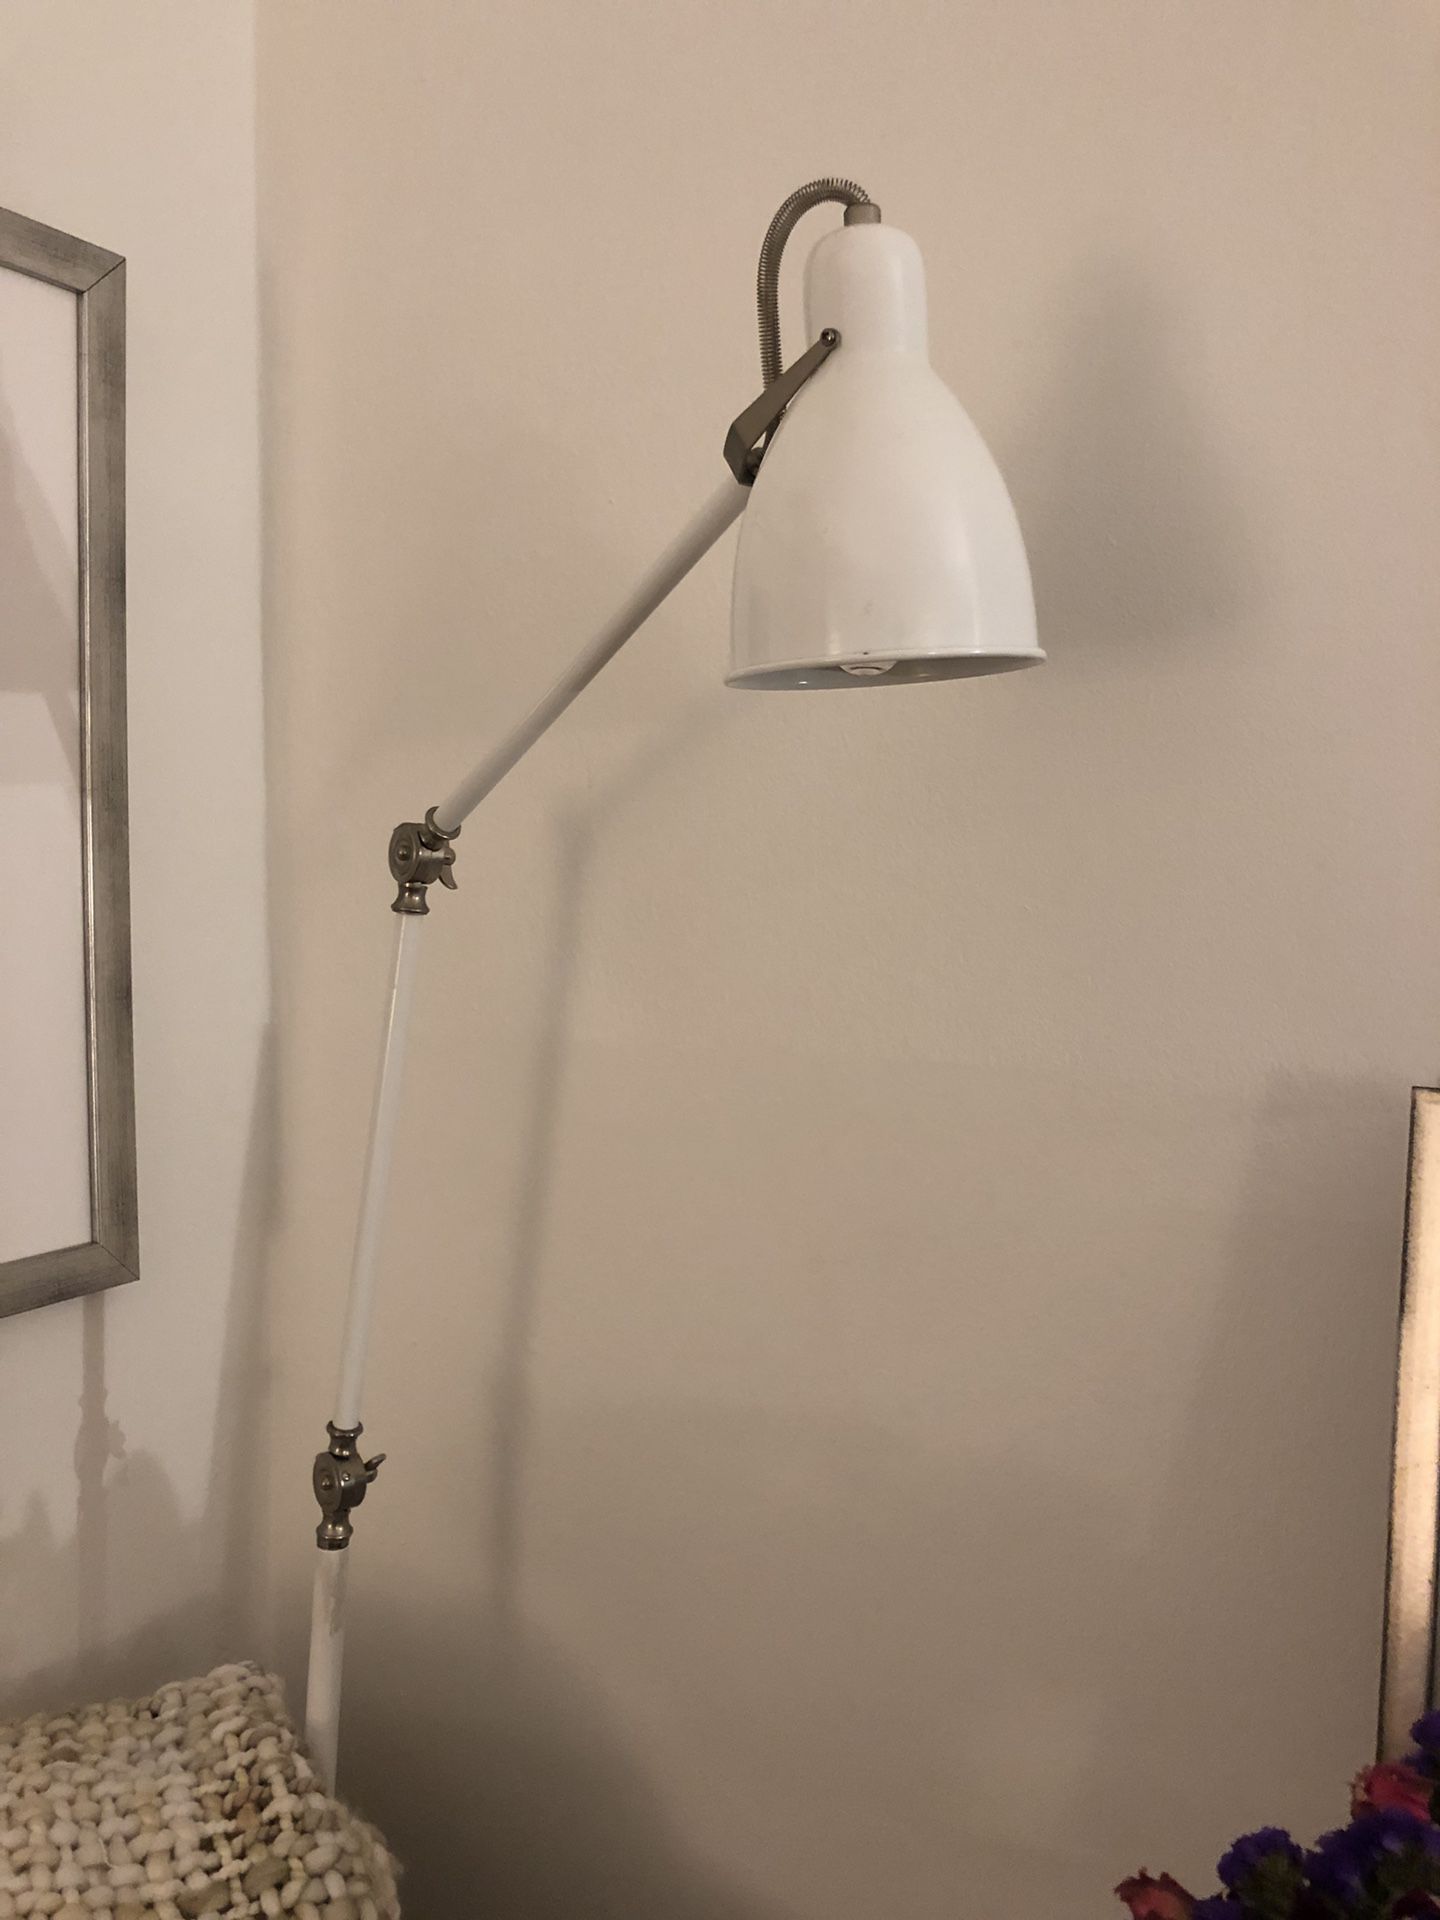 Floor task lamp